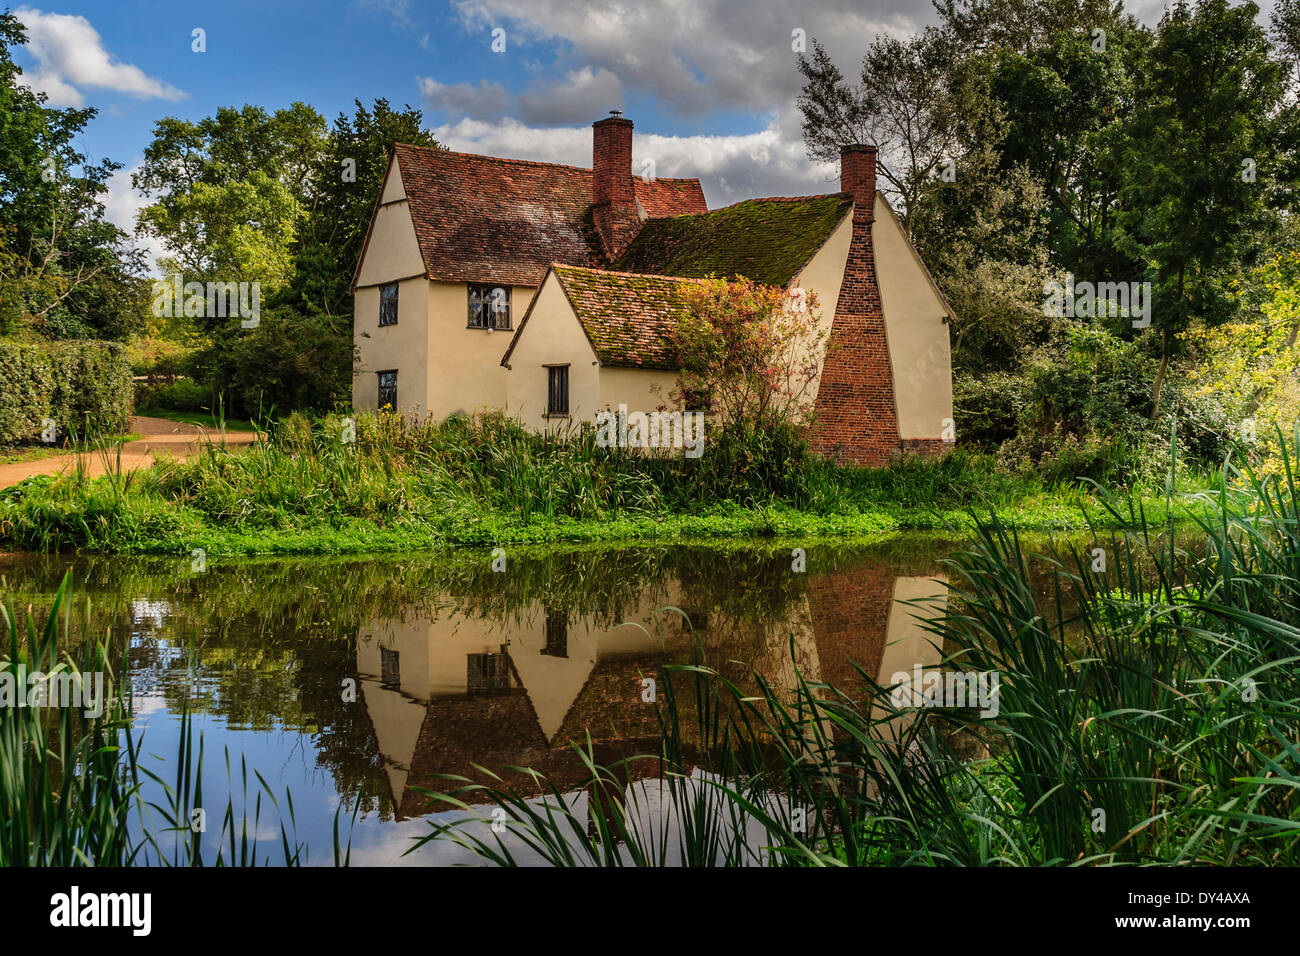 Willy lott's Cottage rivière stour moulin de flatford suffolk angleterre Banque D'Images